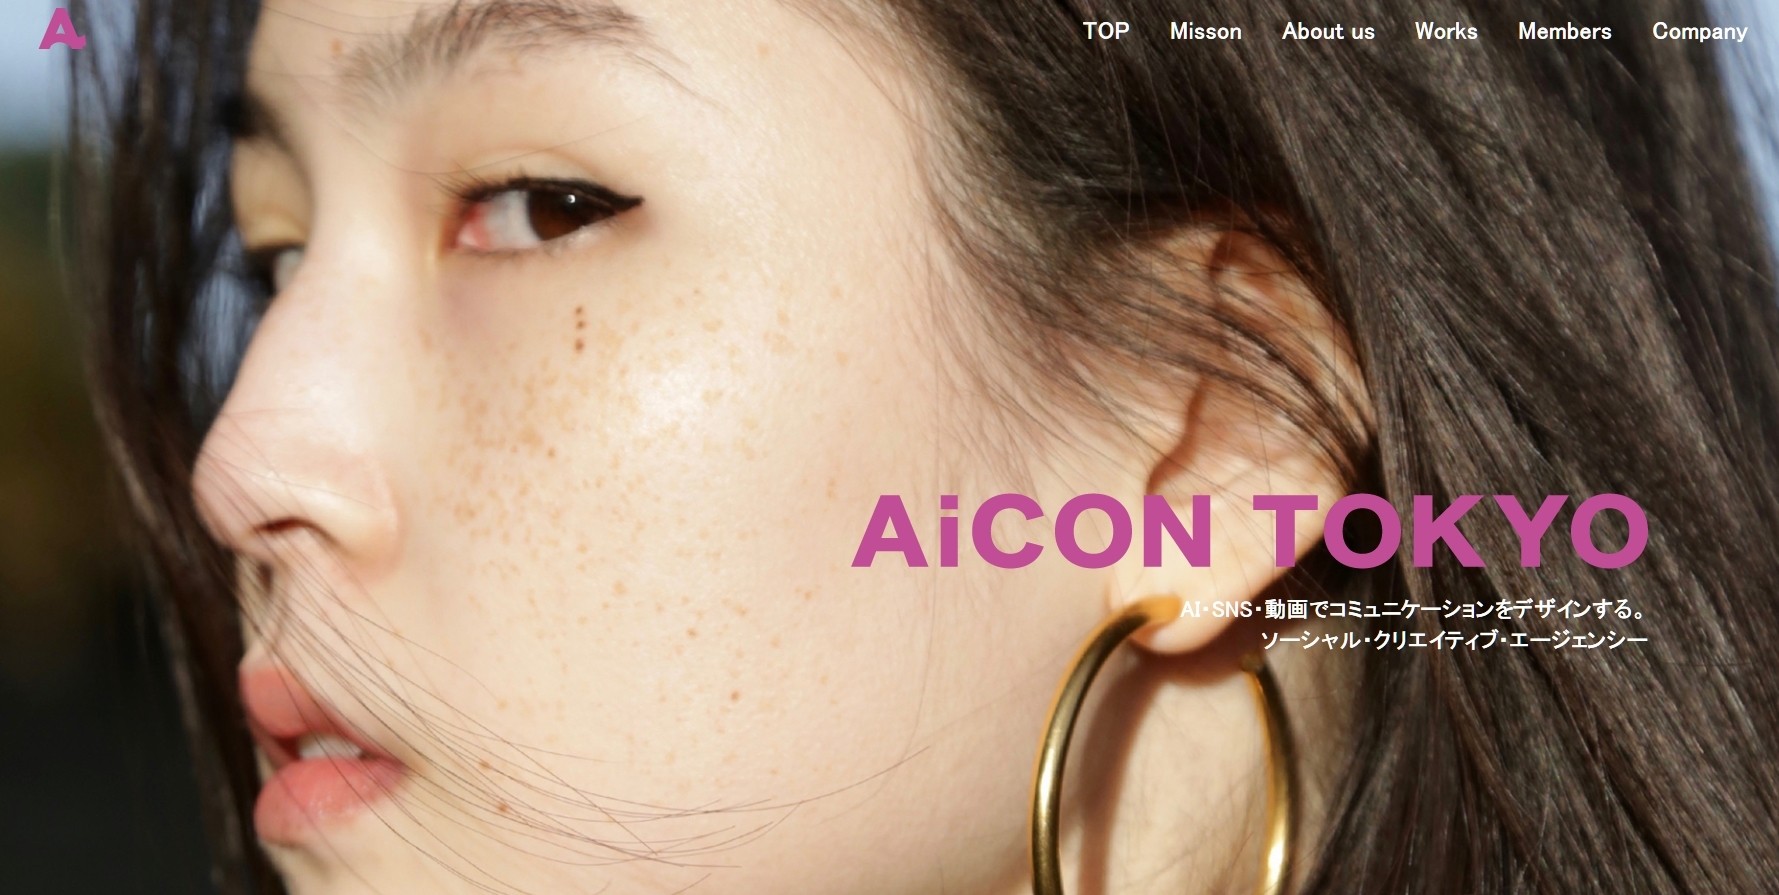 AiCON TOKYO株式会社のAiCON TOKYO株式会社サービス